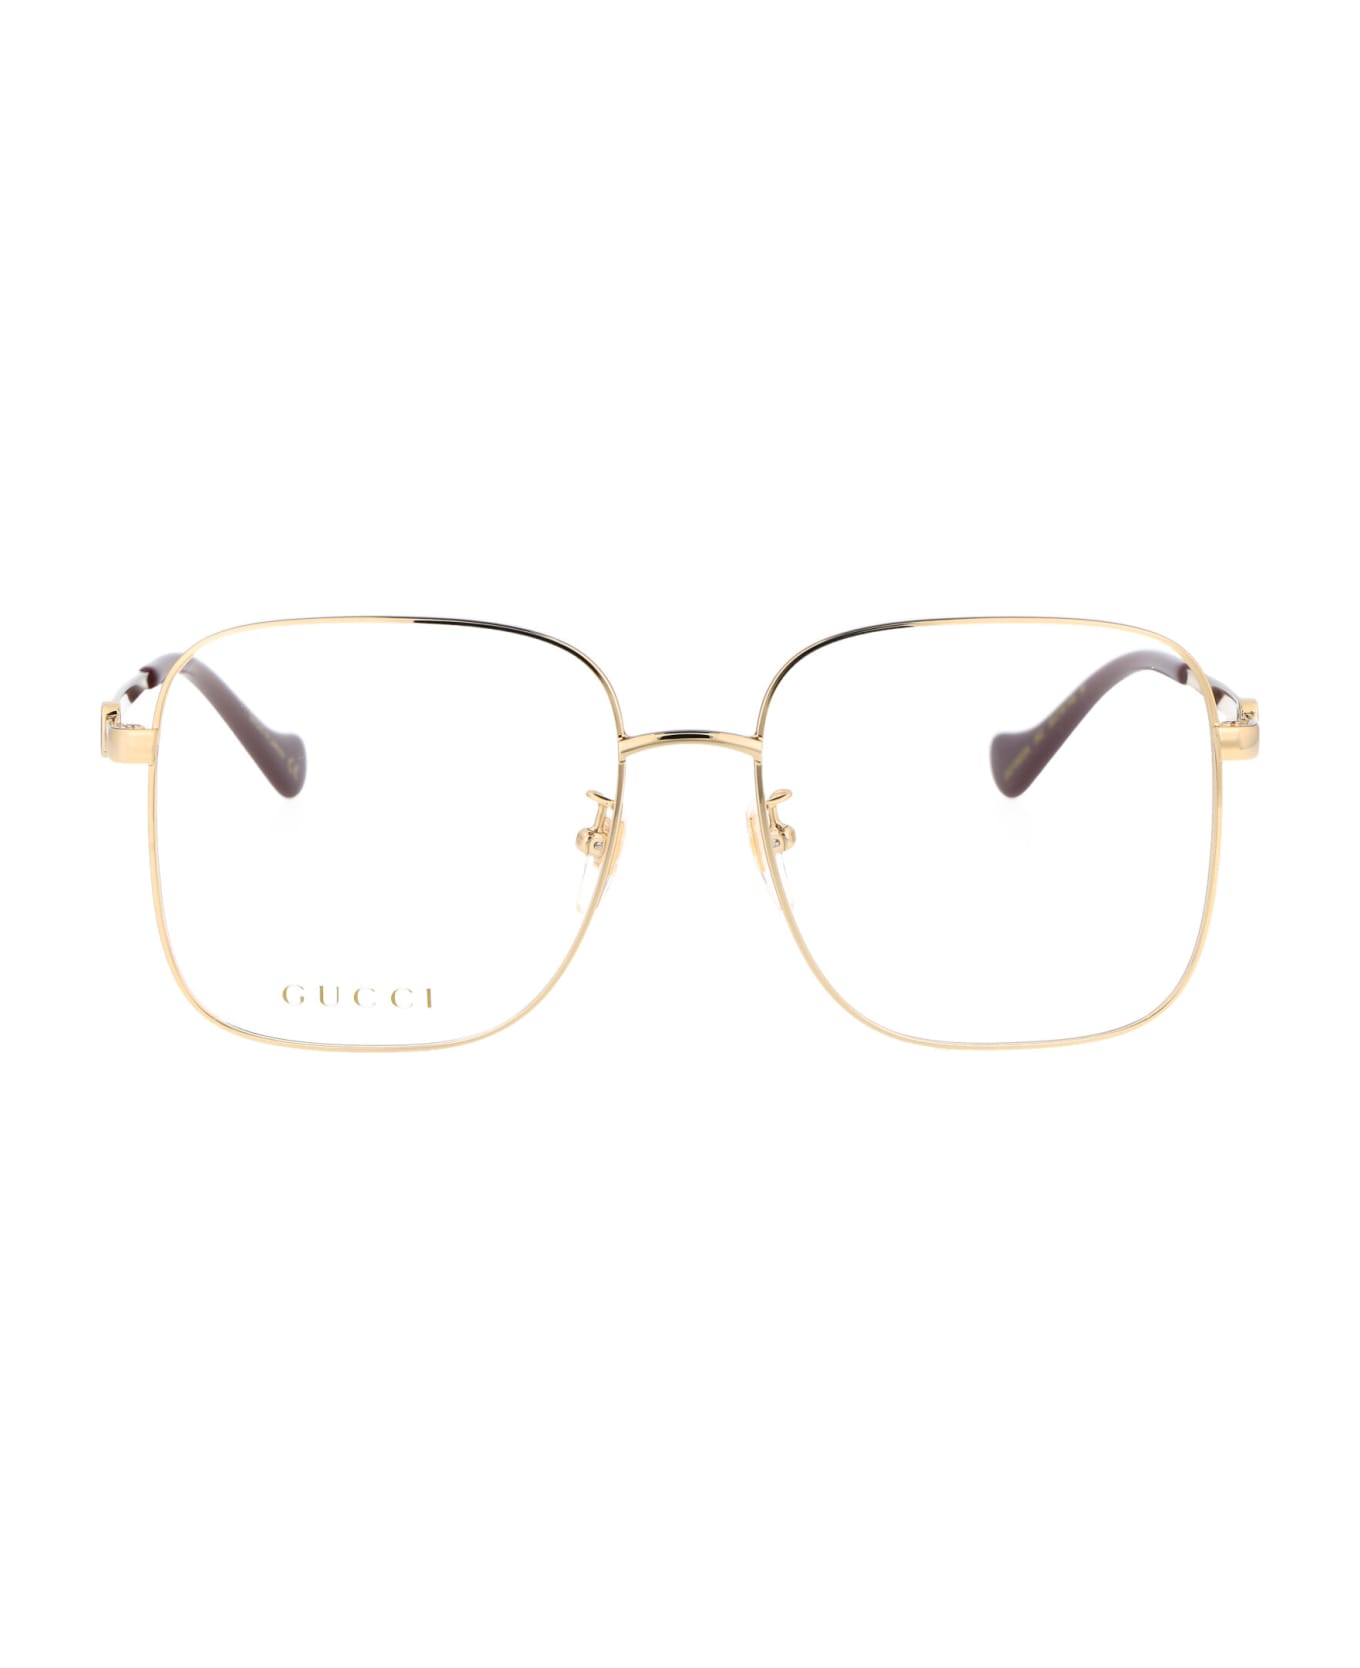 Gucci Eyewear Gg1092oa Glasses - 002 GOLD GOLD TRANSPARENT